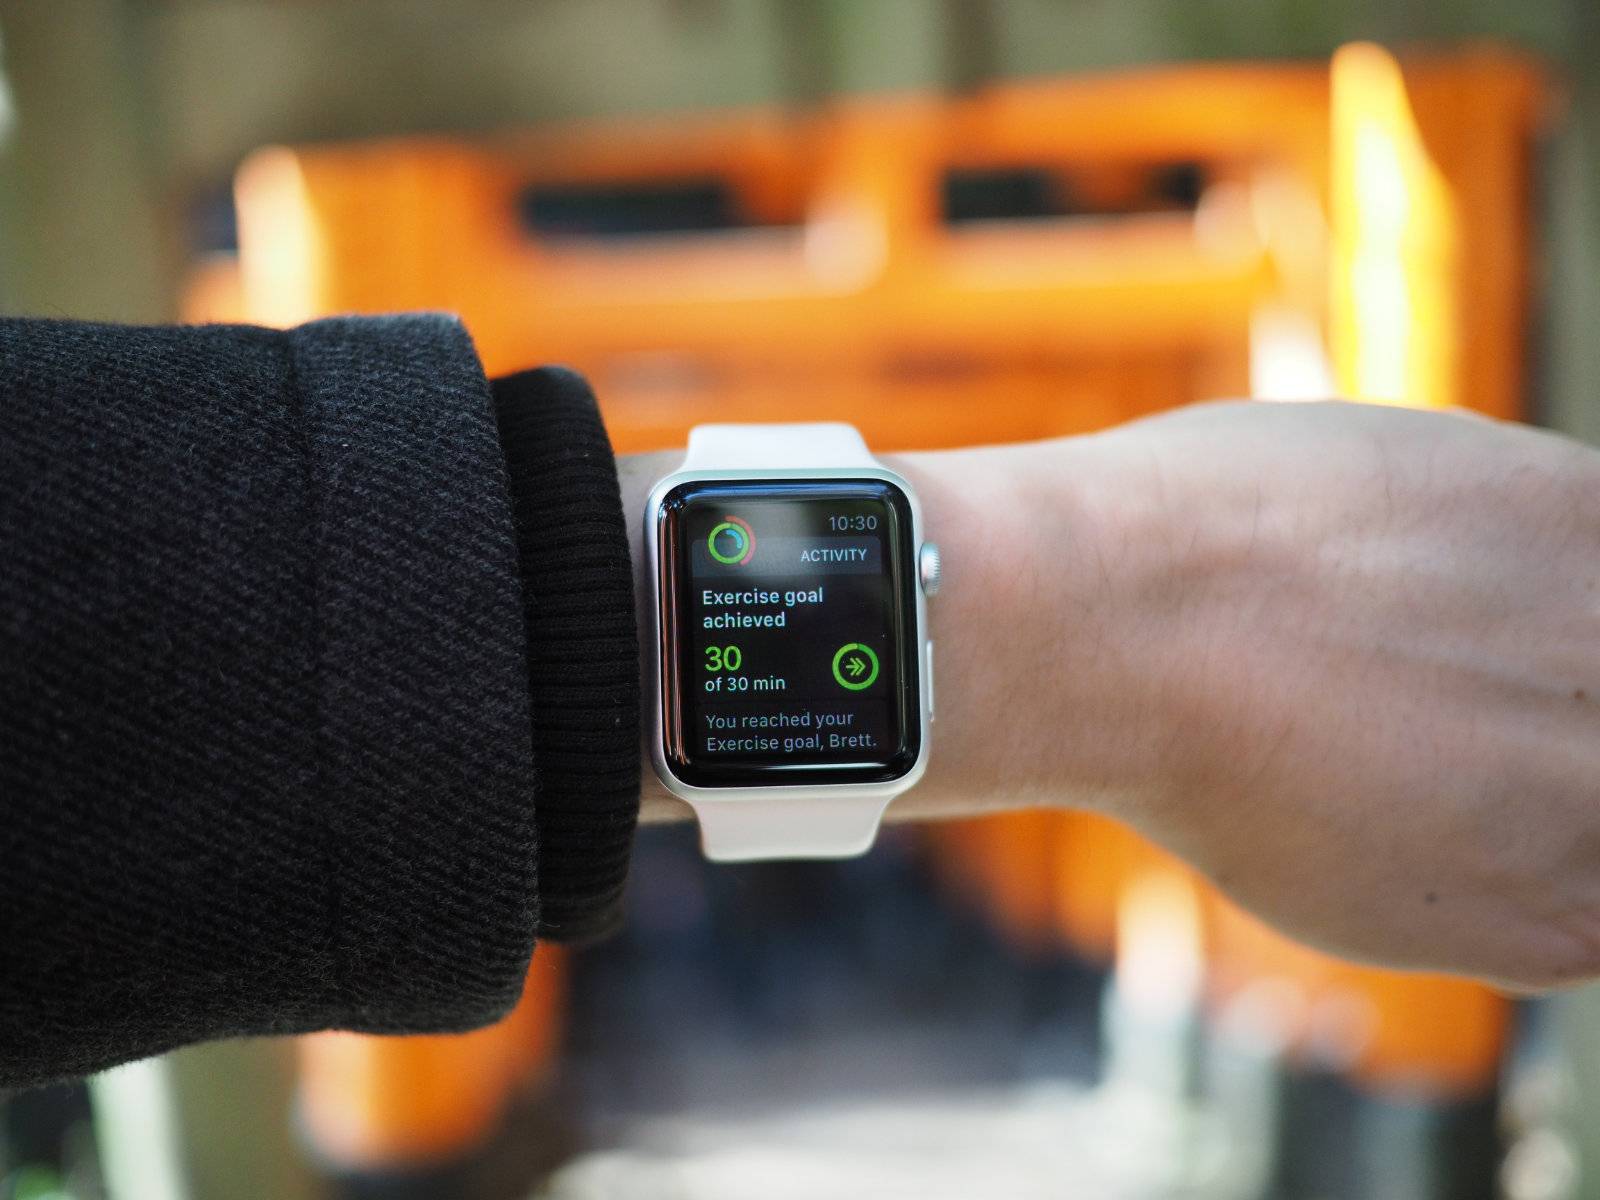 Apple watch exercise goal met